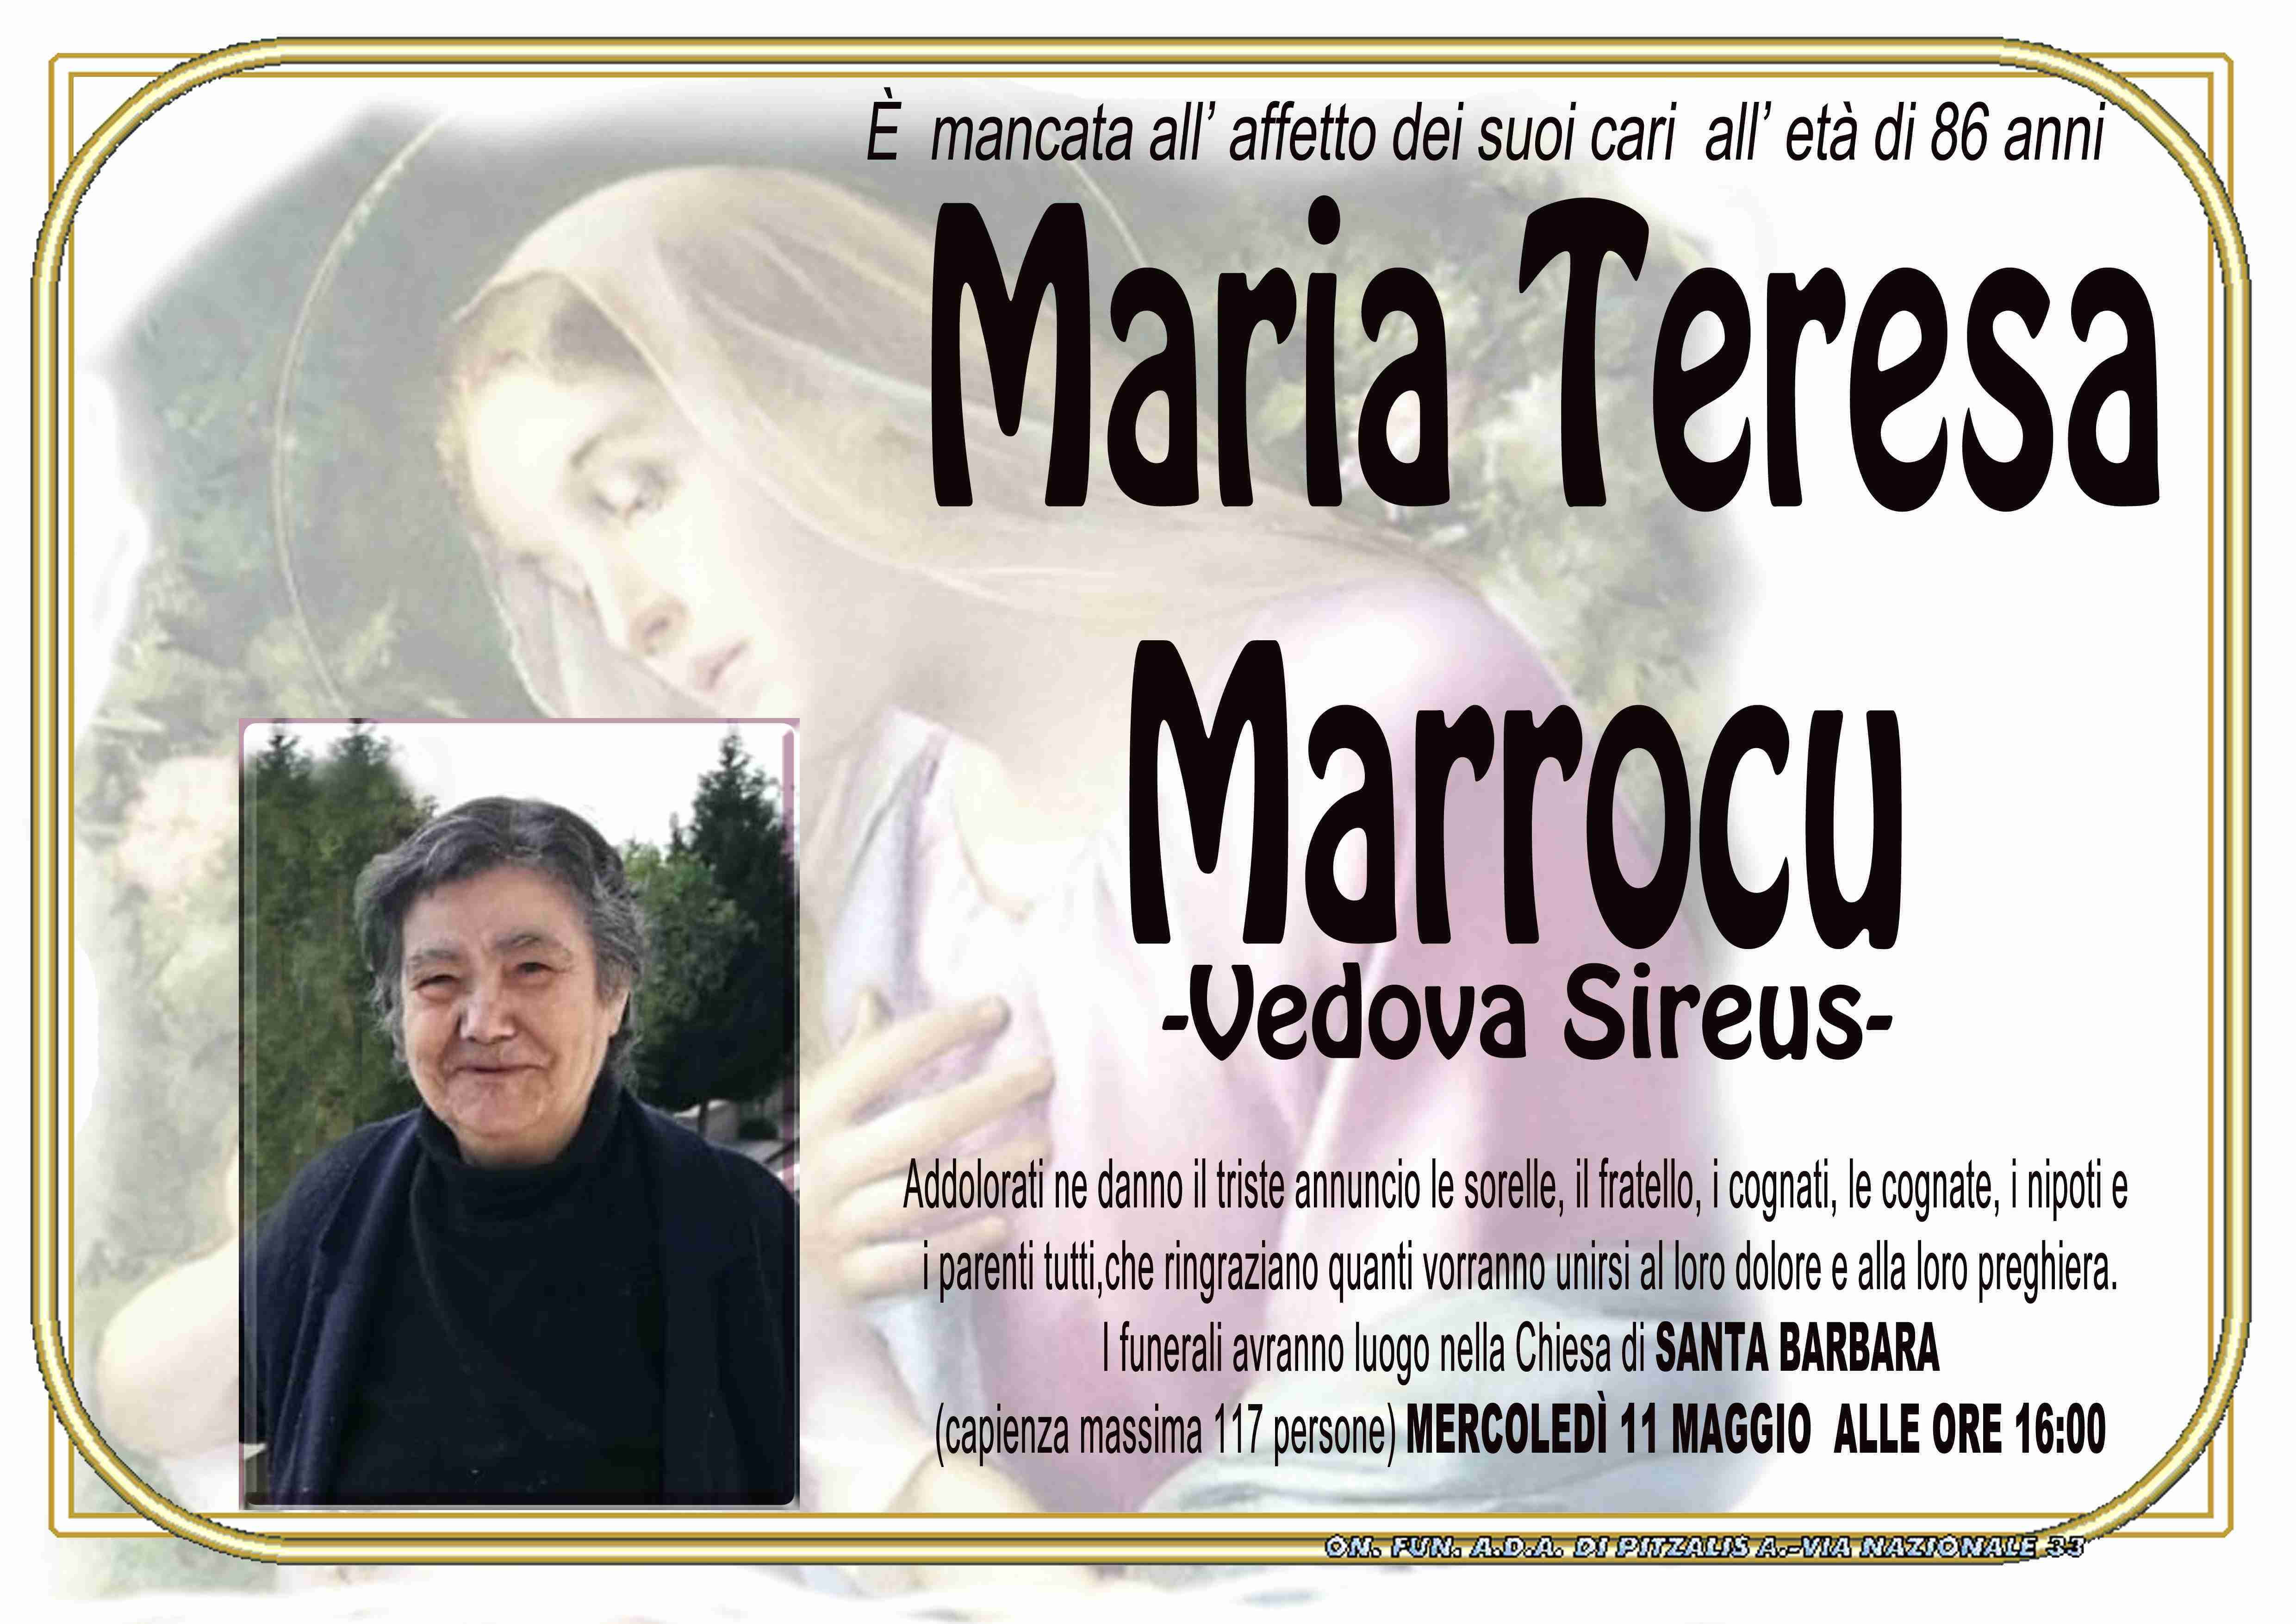 Maria Teresa Marrocu